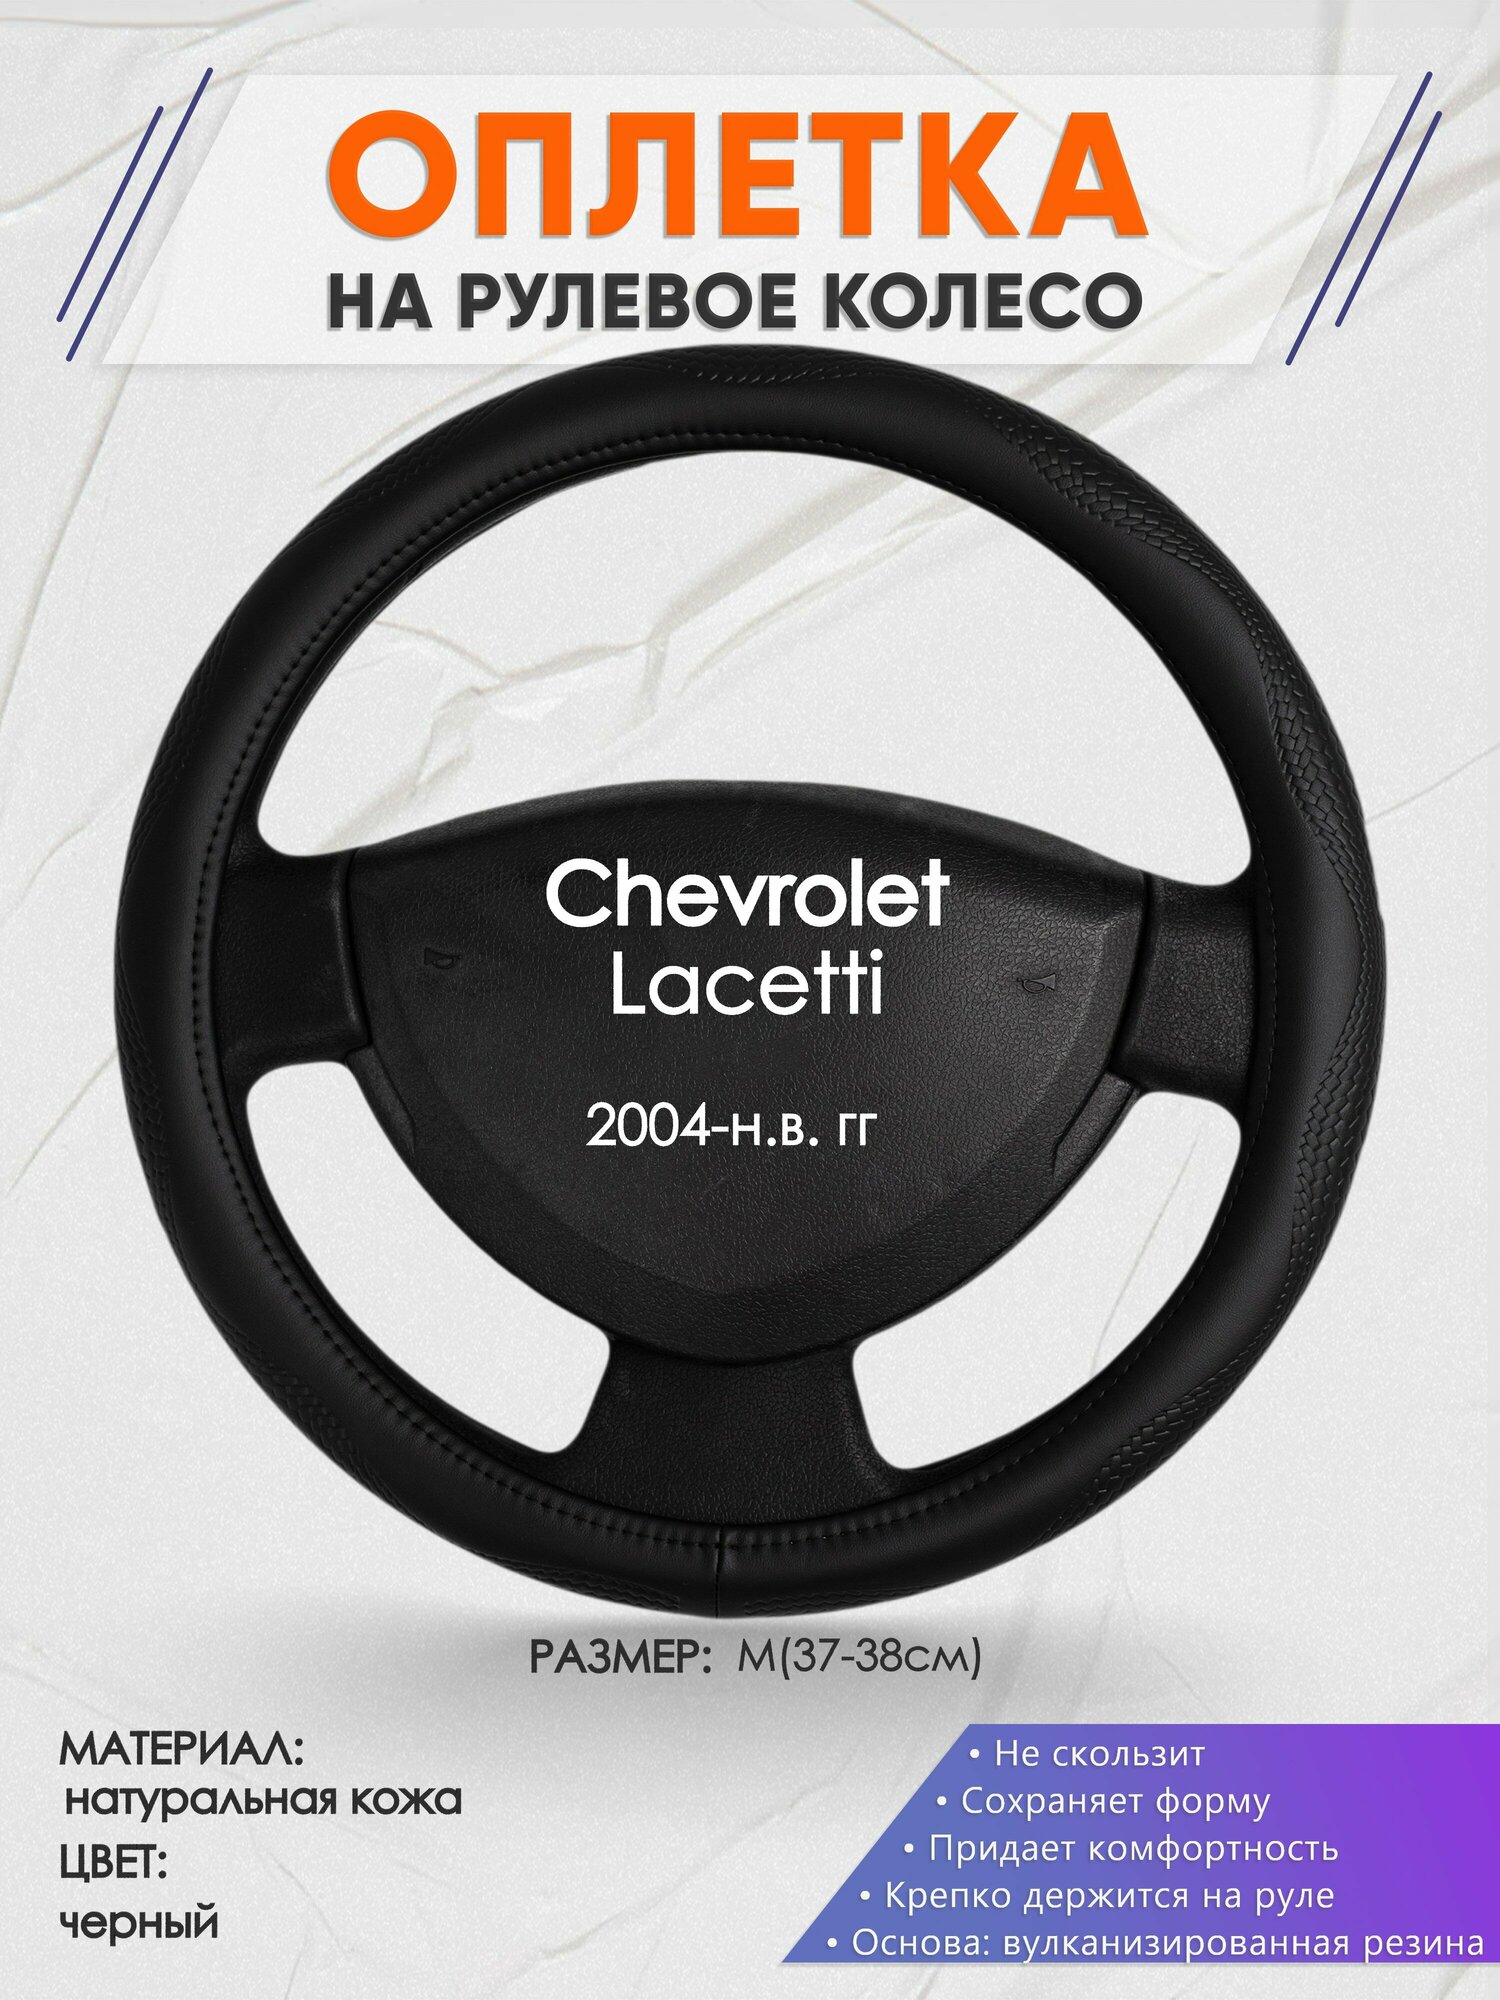 Оплетка на руль для Chevrolet Lacetti (Шевроле Лачети) 2004-н. в, M(37-38см), Натуральная кожа 32